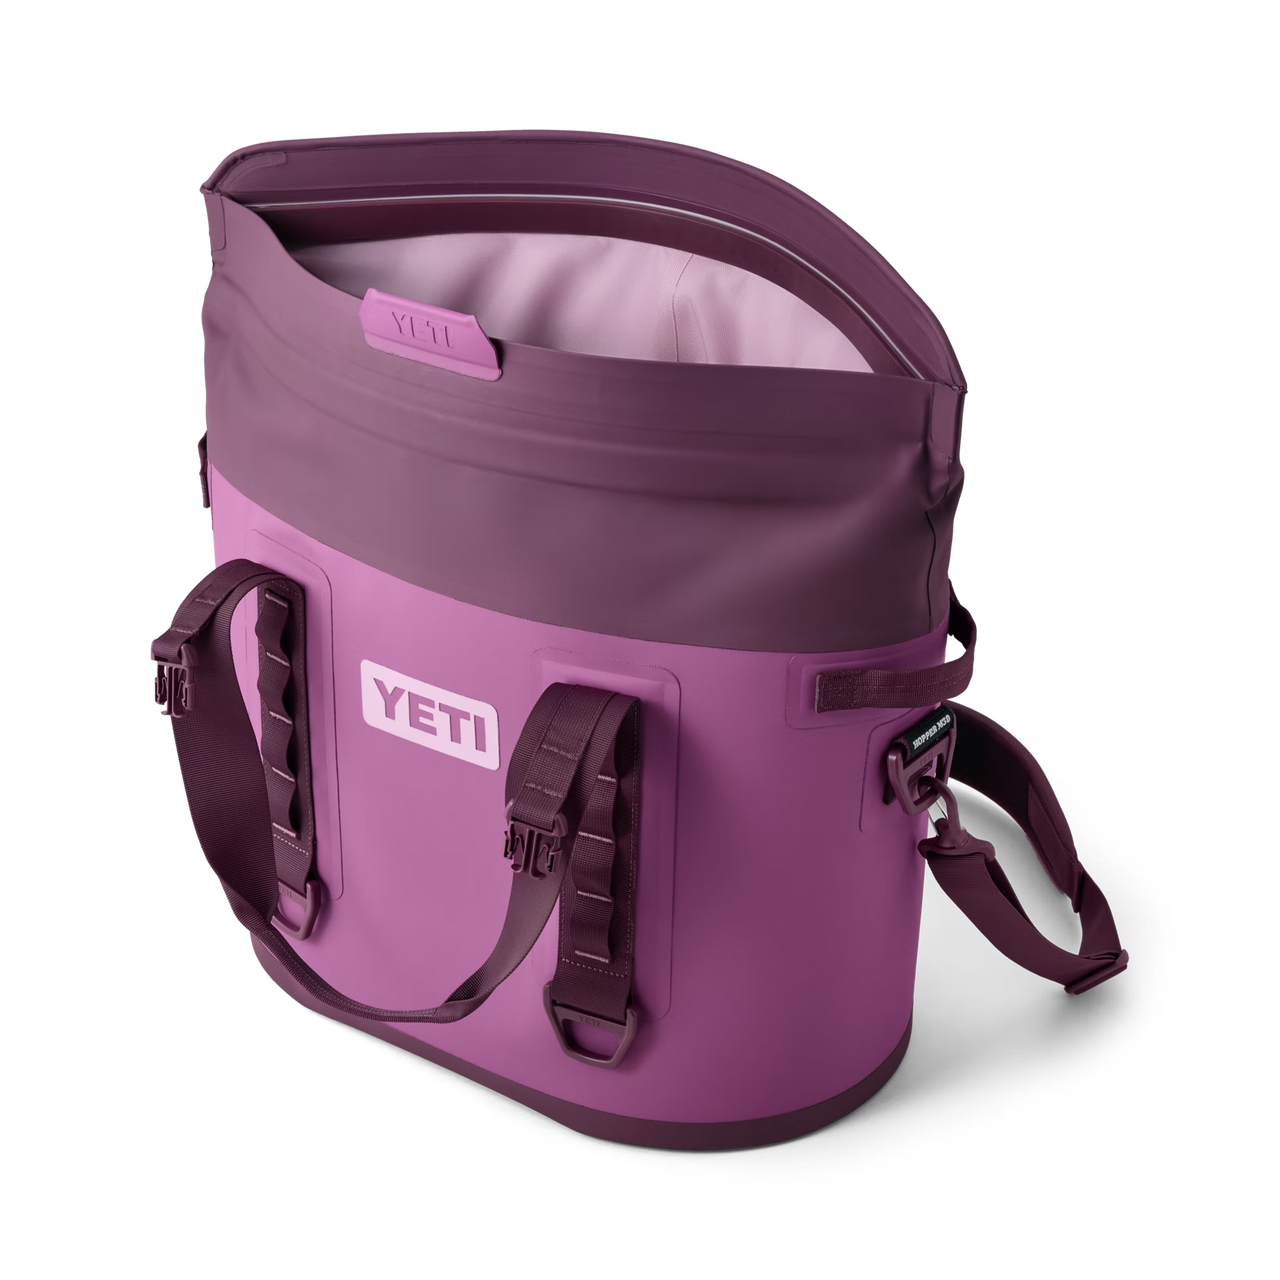 YETI Hopper M30 2.0 Cooler - Nordic Purple - TackleDirect